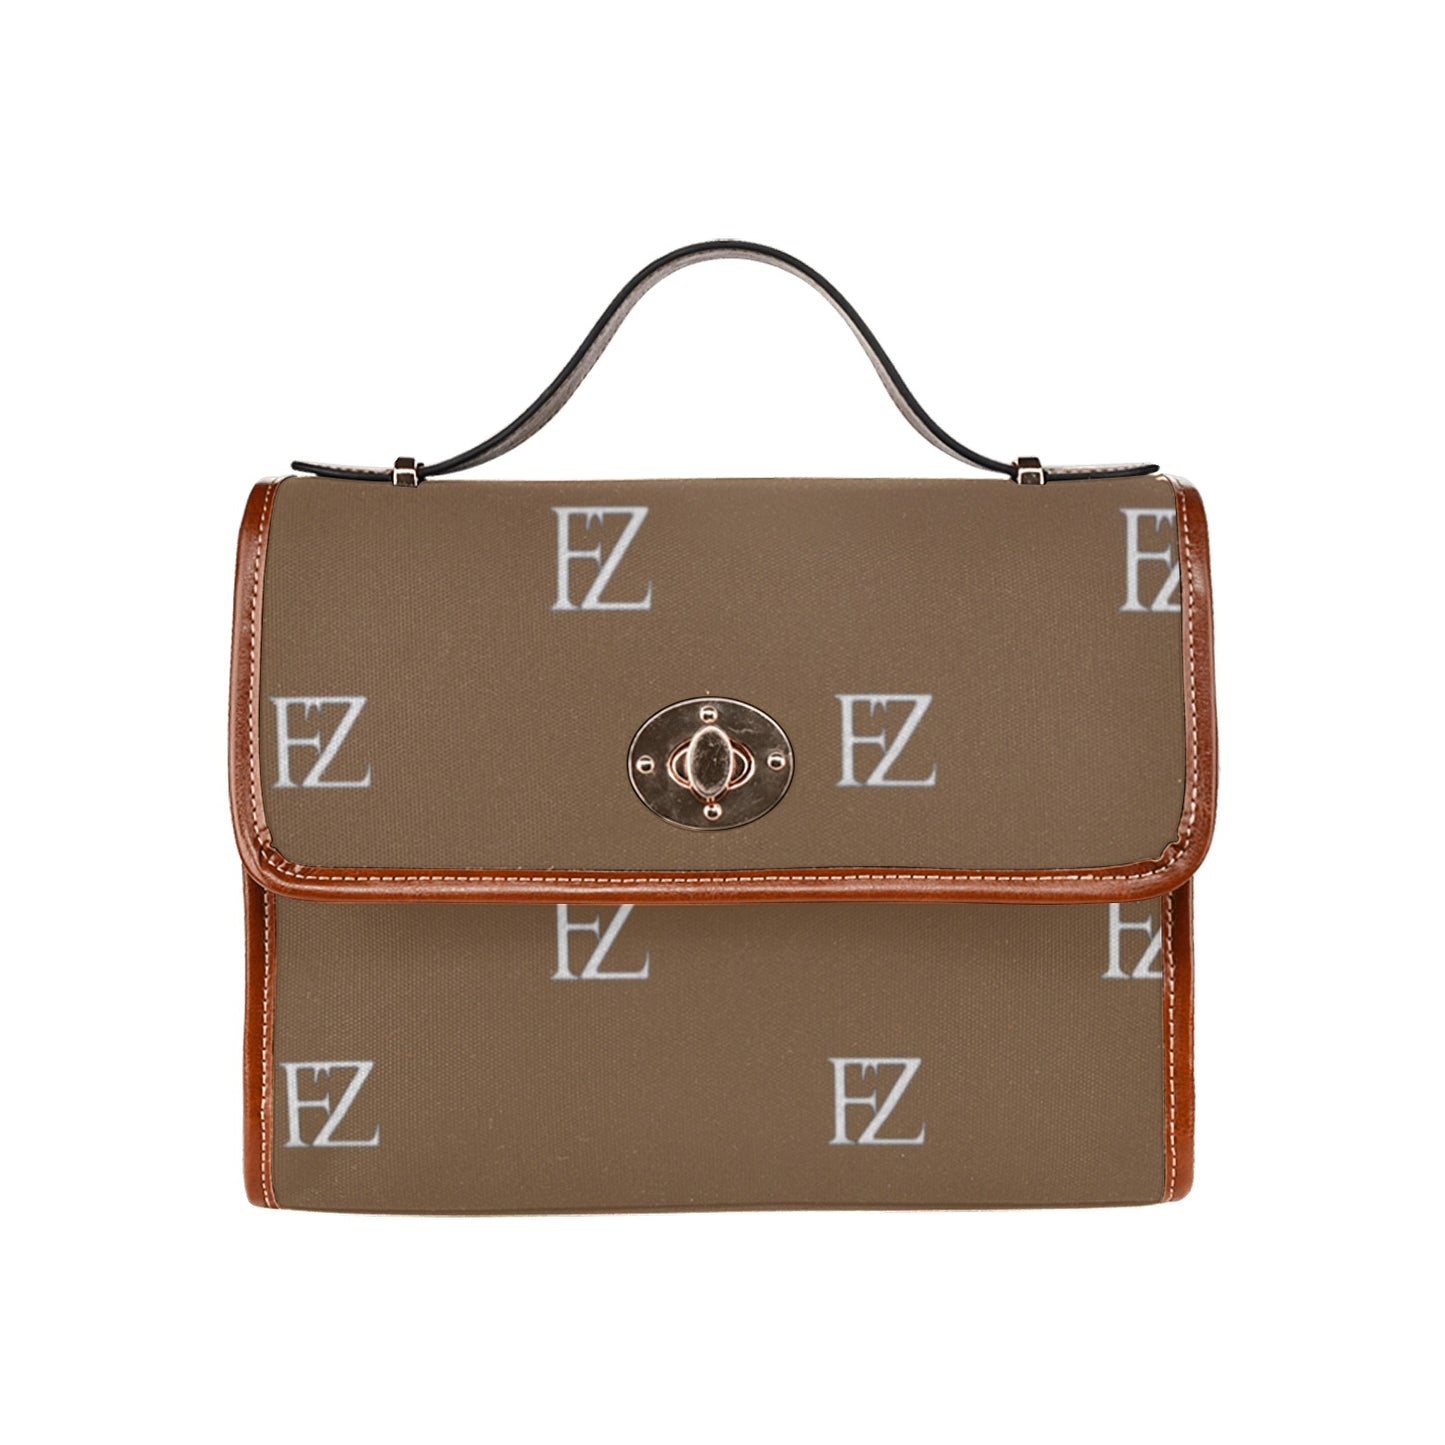 fz zone handbag one size / fz zone handbag - brown all over print waterproof canvas bag(model1641)(brown strap)